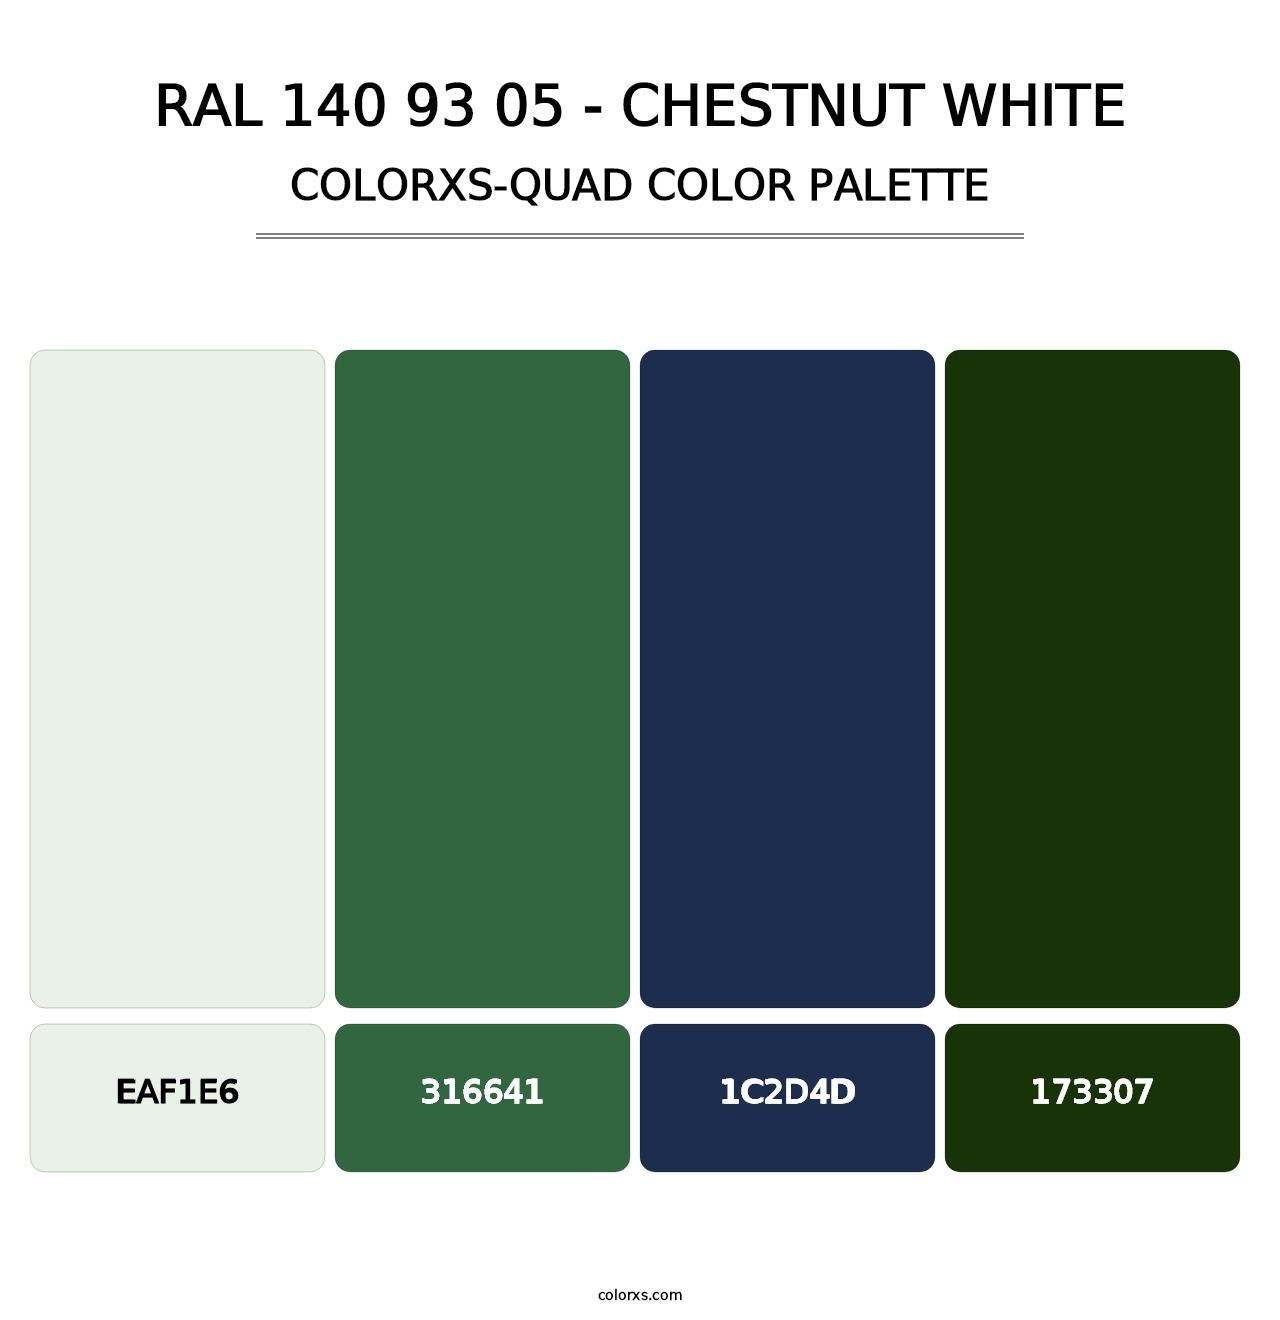 RAL 140 93 05 - Chestnut White - Colorxs Quad Palette